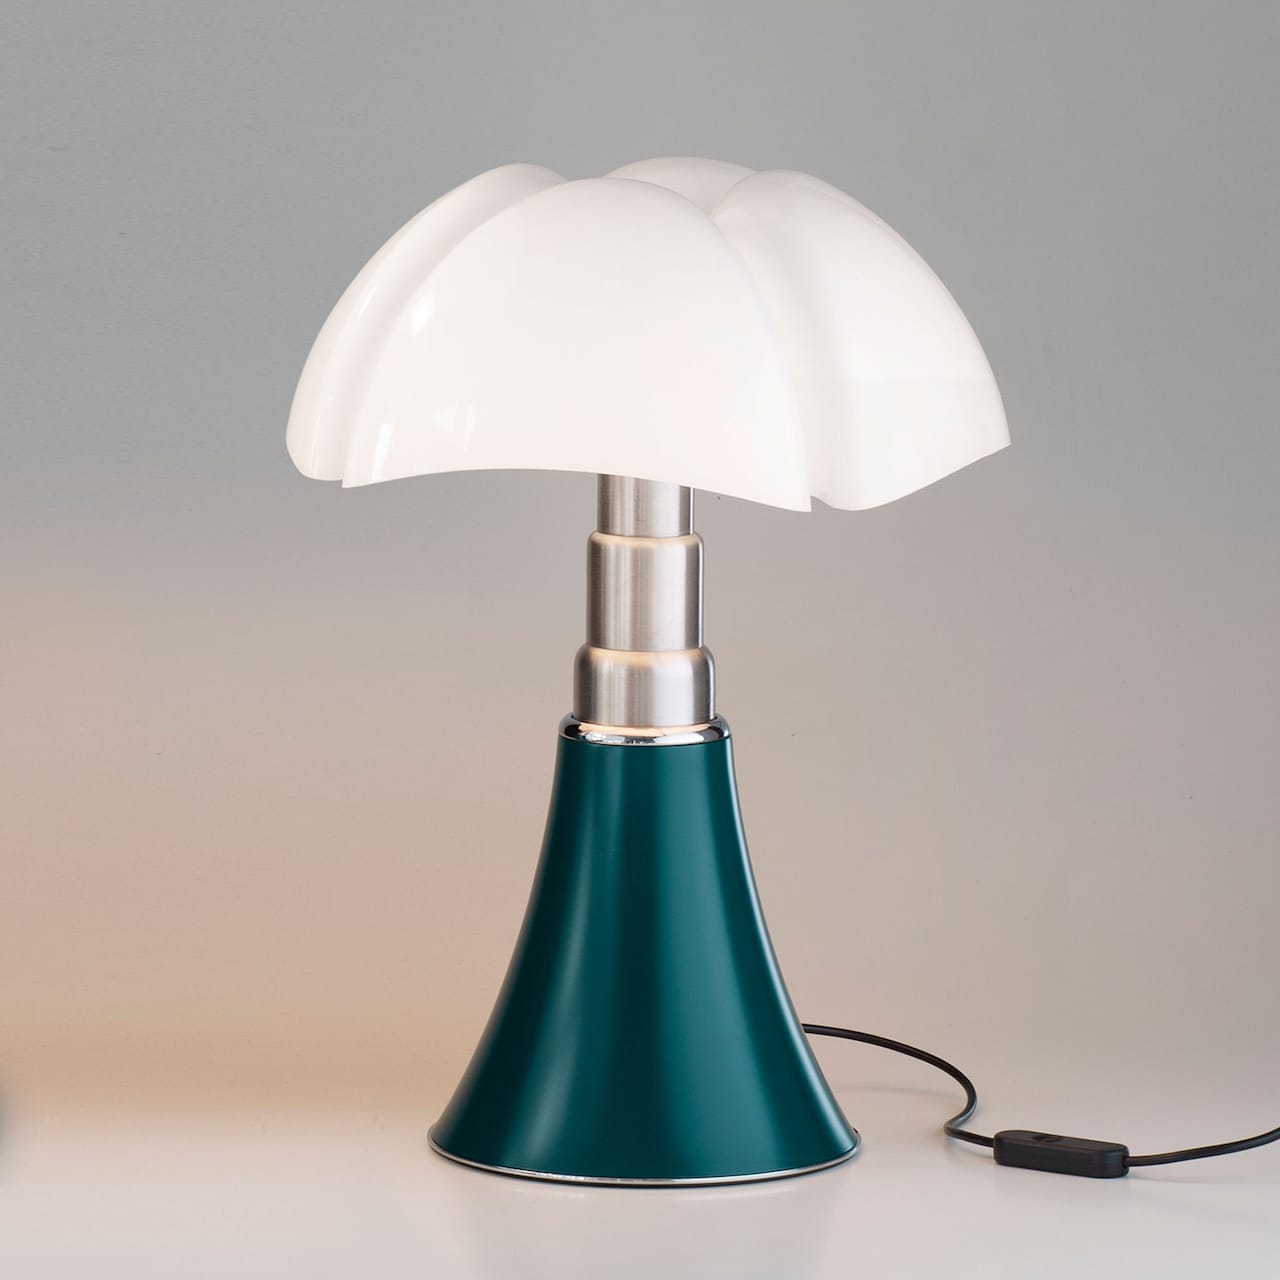 Minipipistrello Table Lamp Agave Green - Dimmable